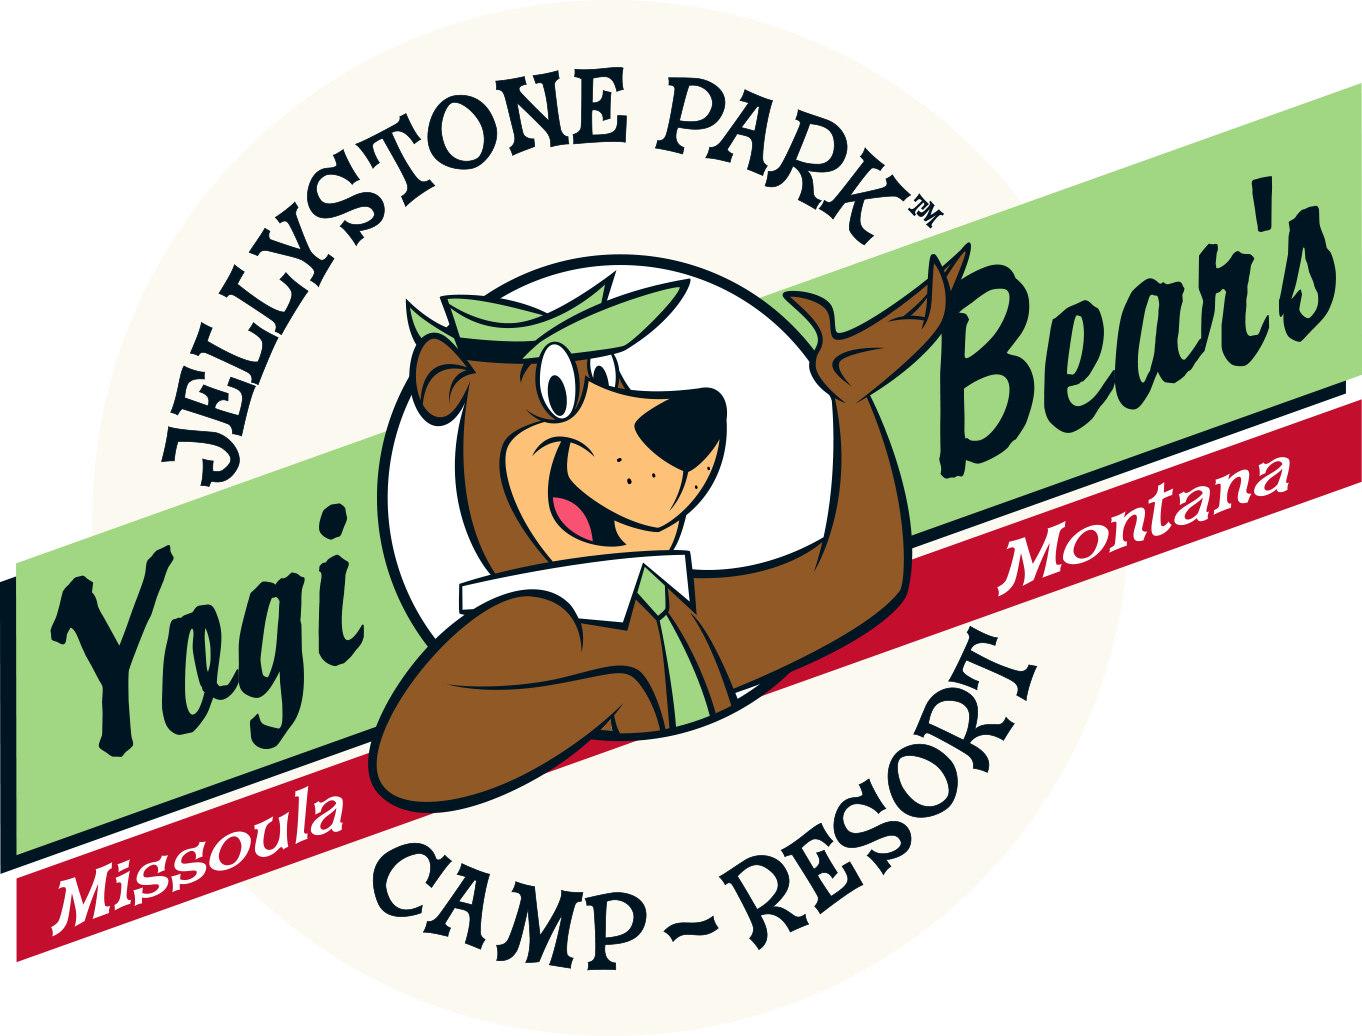 Jellystone Park Missoula, Montana - Yogi Bear Jellystone Park Pa (1362x1036)